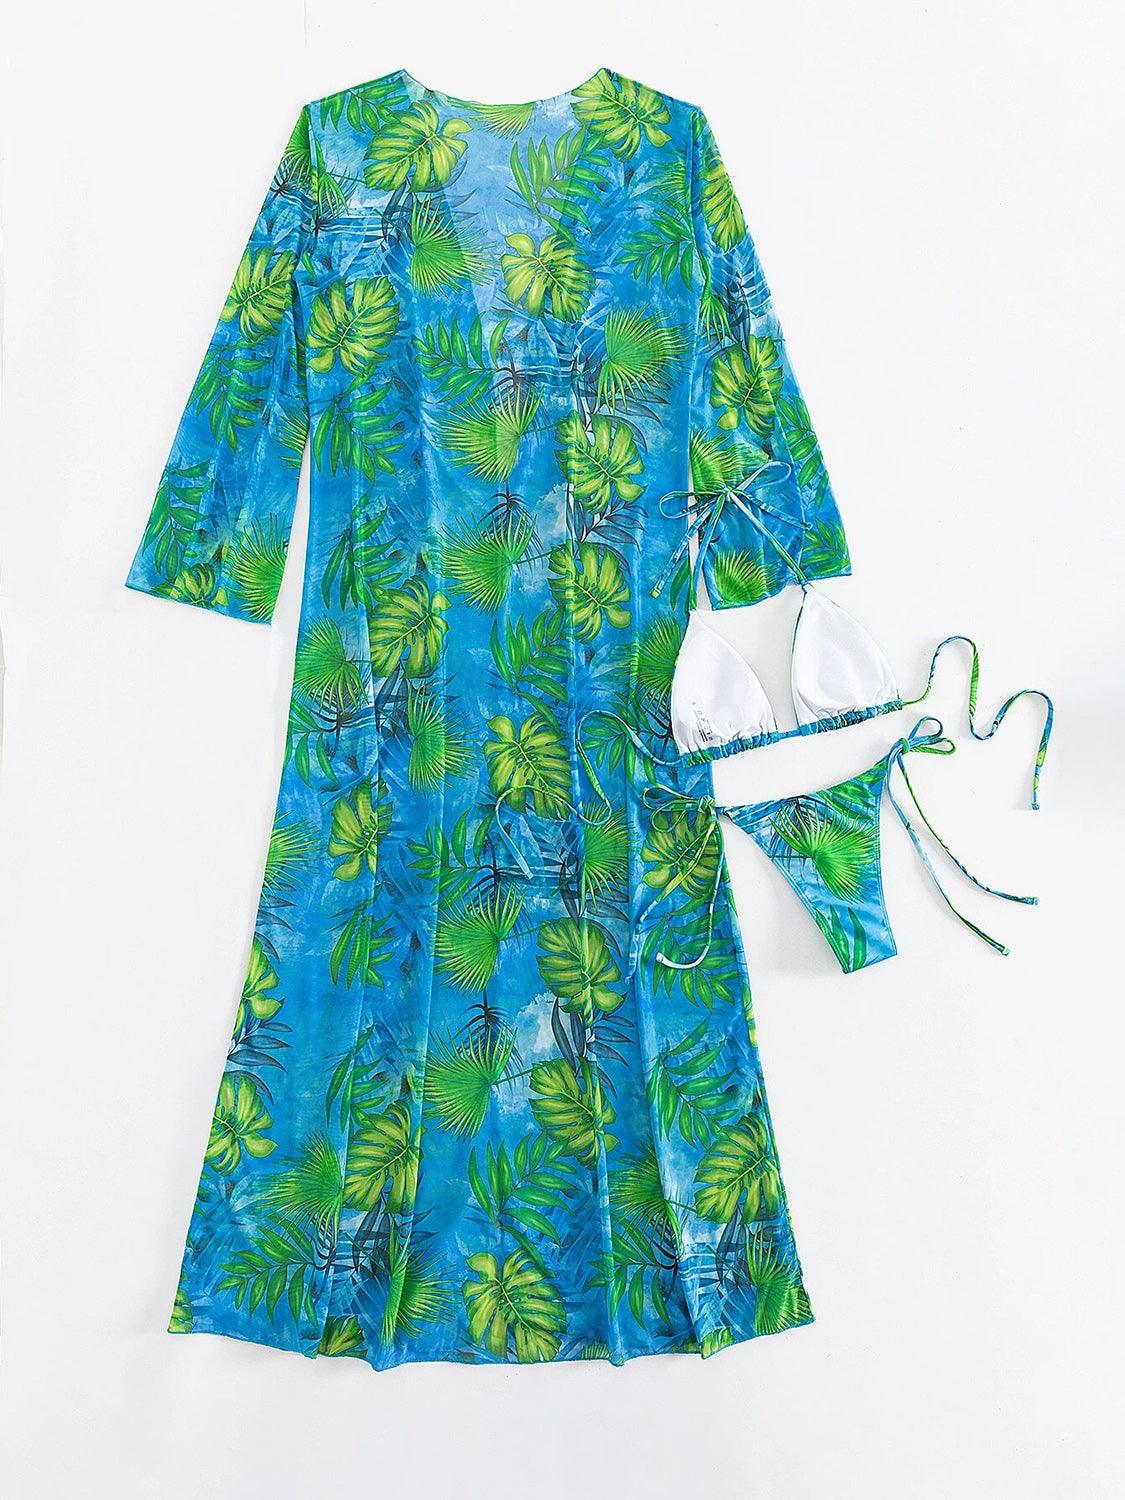 Bona Fide Fashion - Printed Halter Neck Three-Piece Swim Set - Women Fashion - Bona Fide Fashion